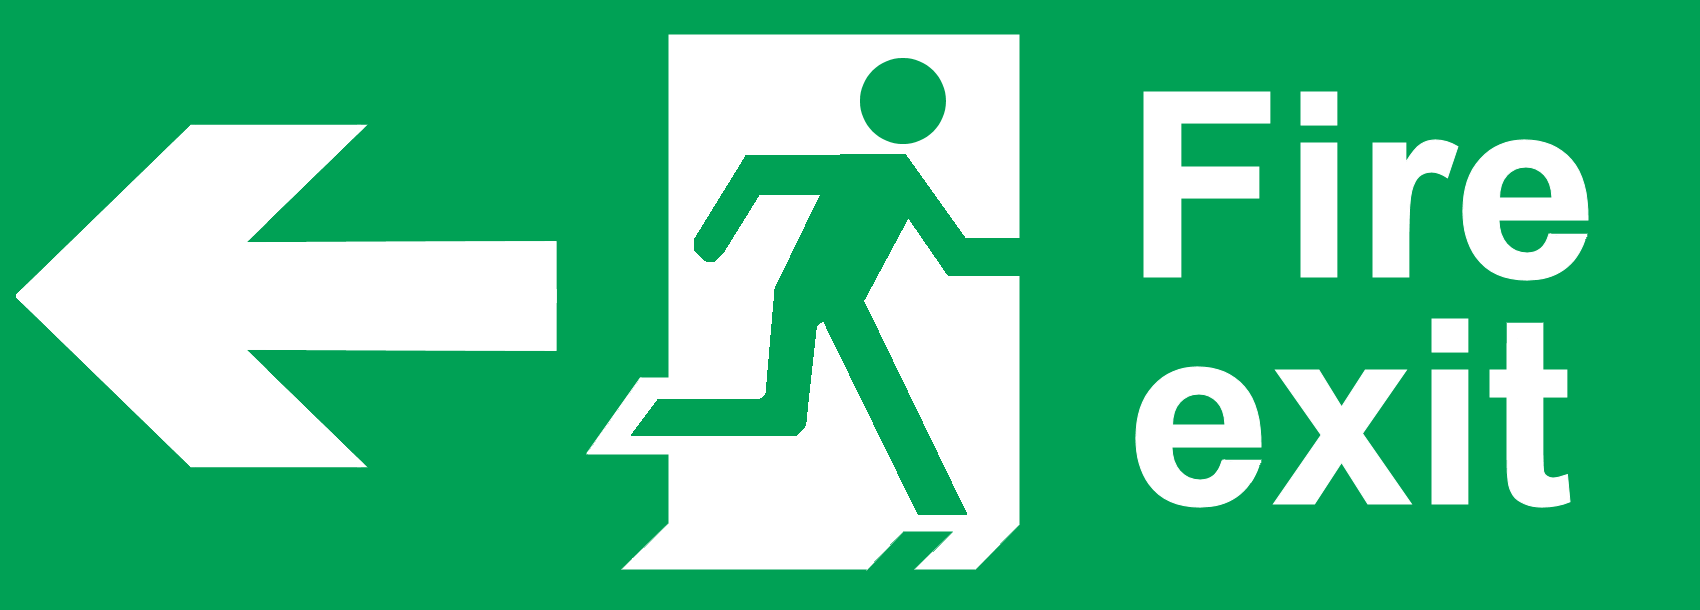 Fire exit clipart